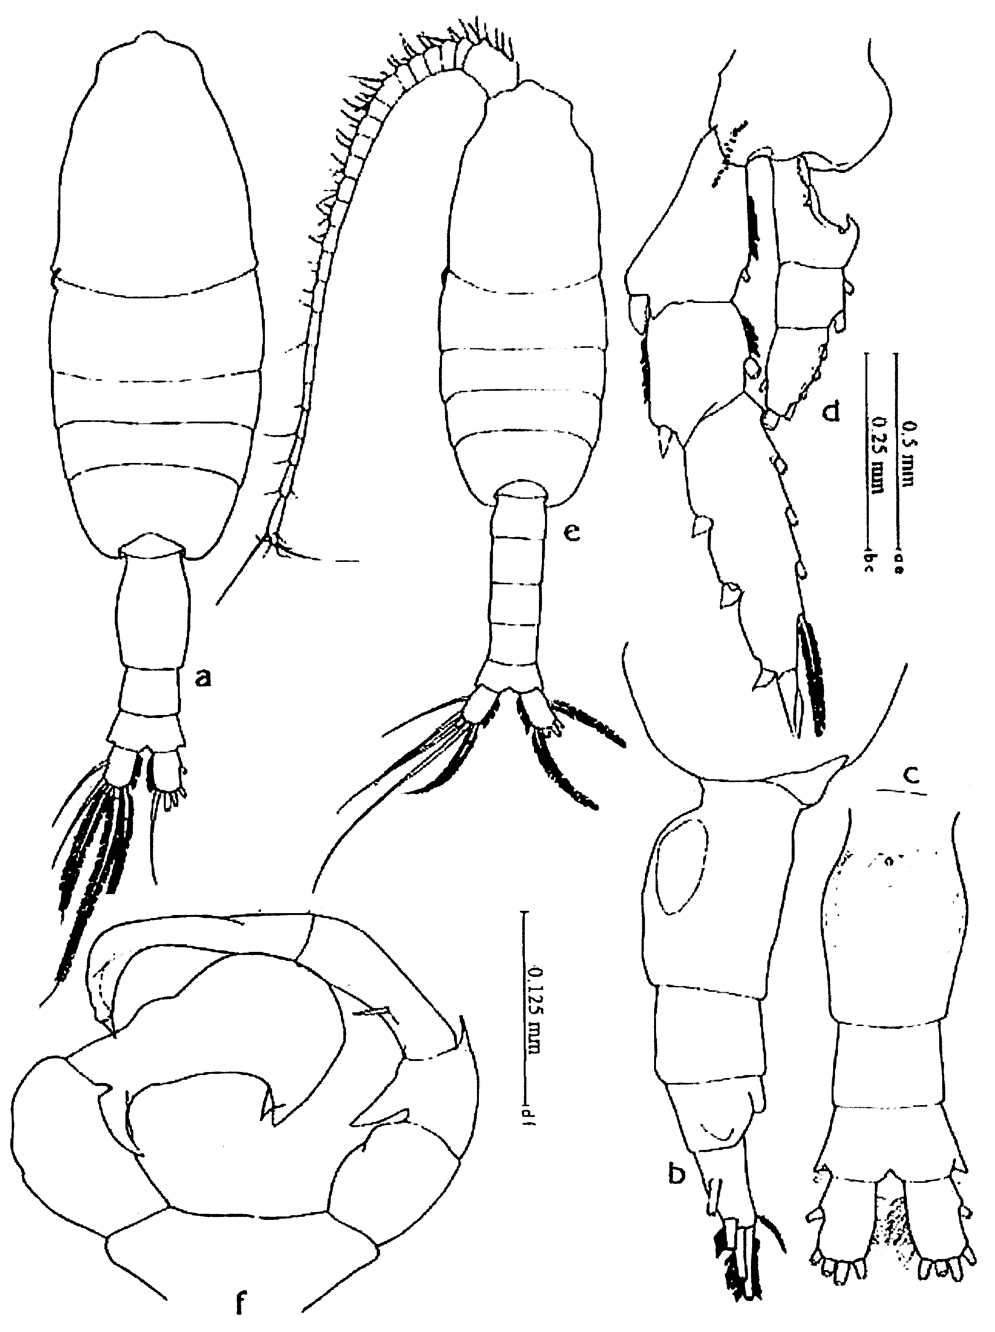 Species Pleuromamma robusta - Plate 12 of morphological figures